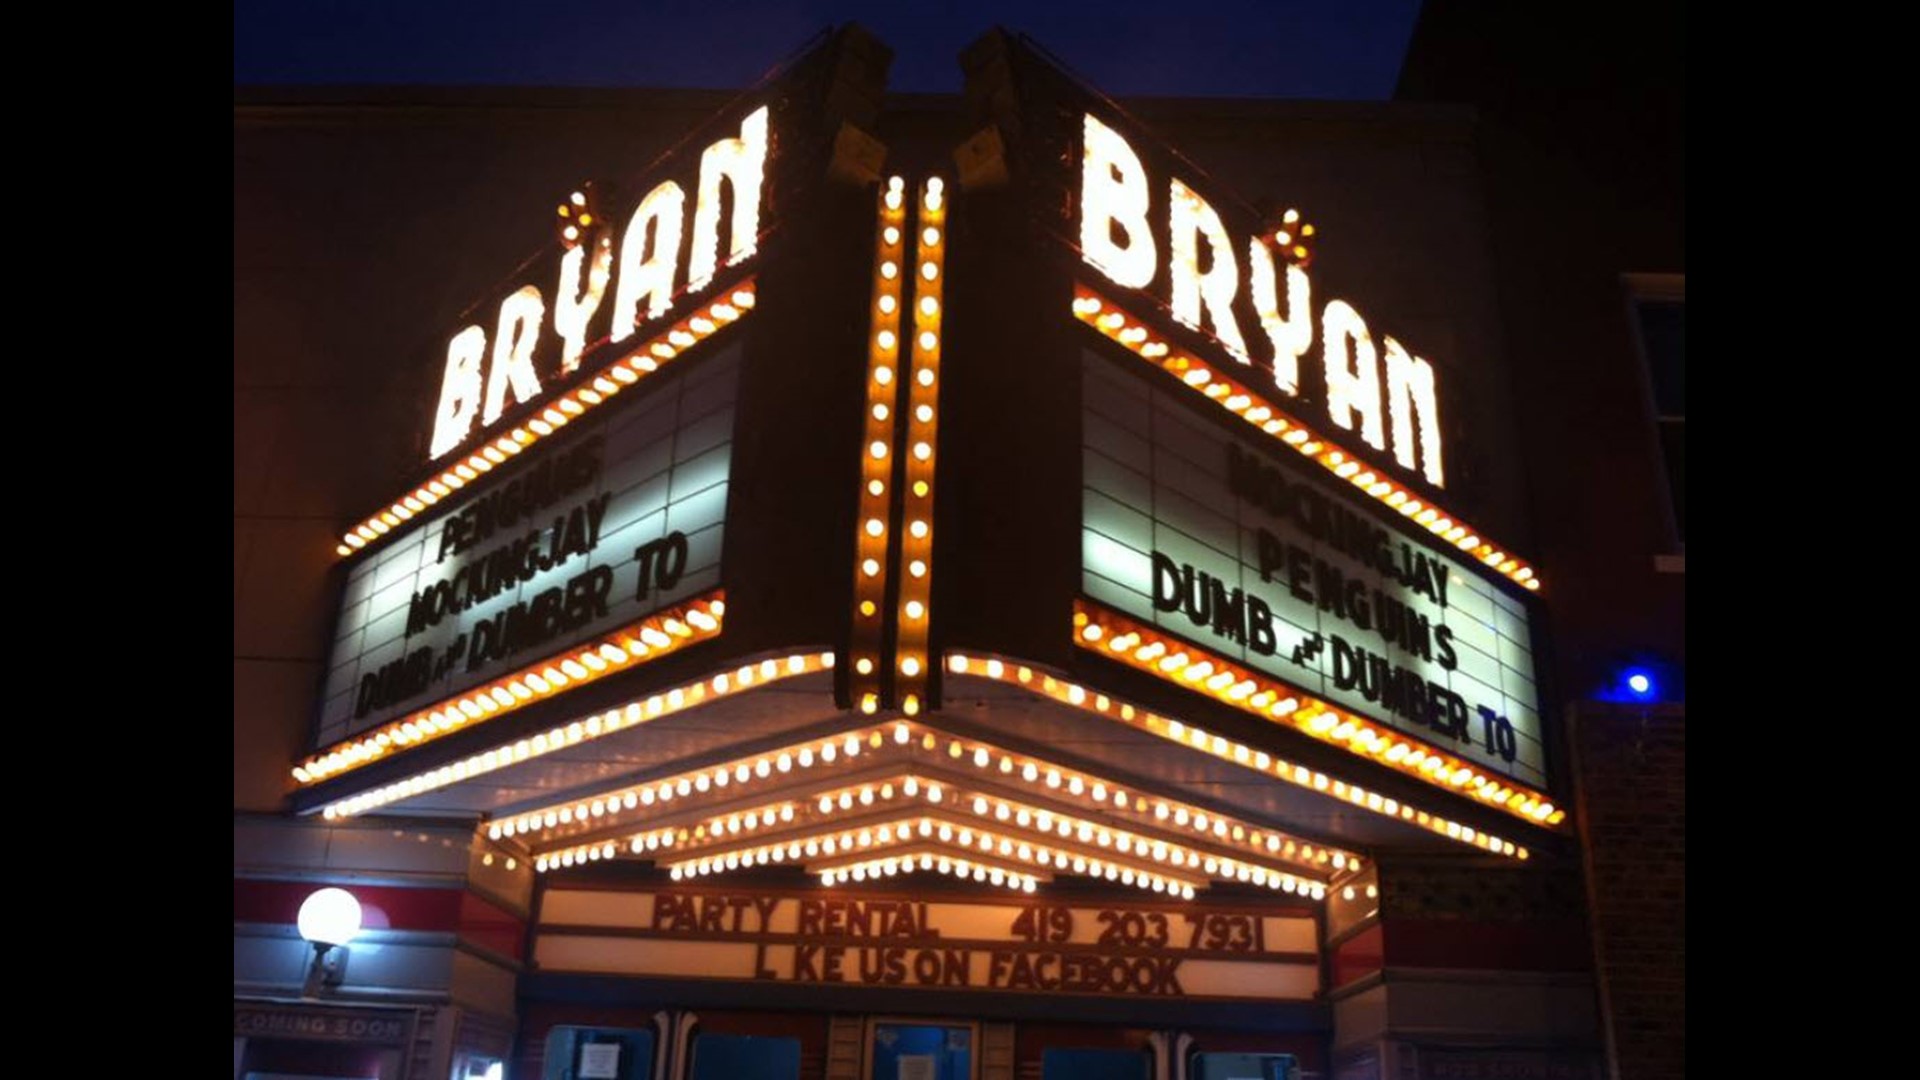 Historic Bryan Theatre brings back free summer movie series